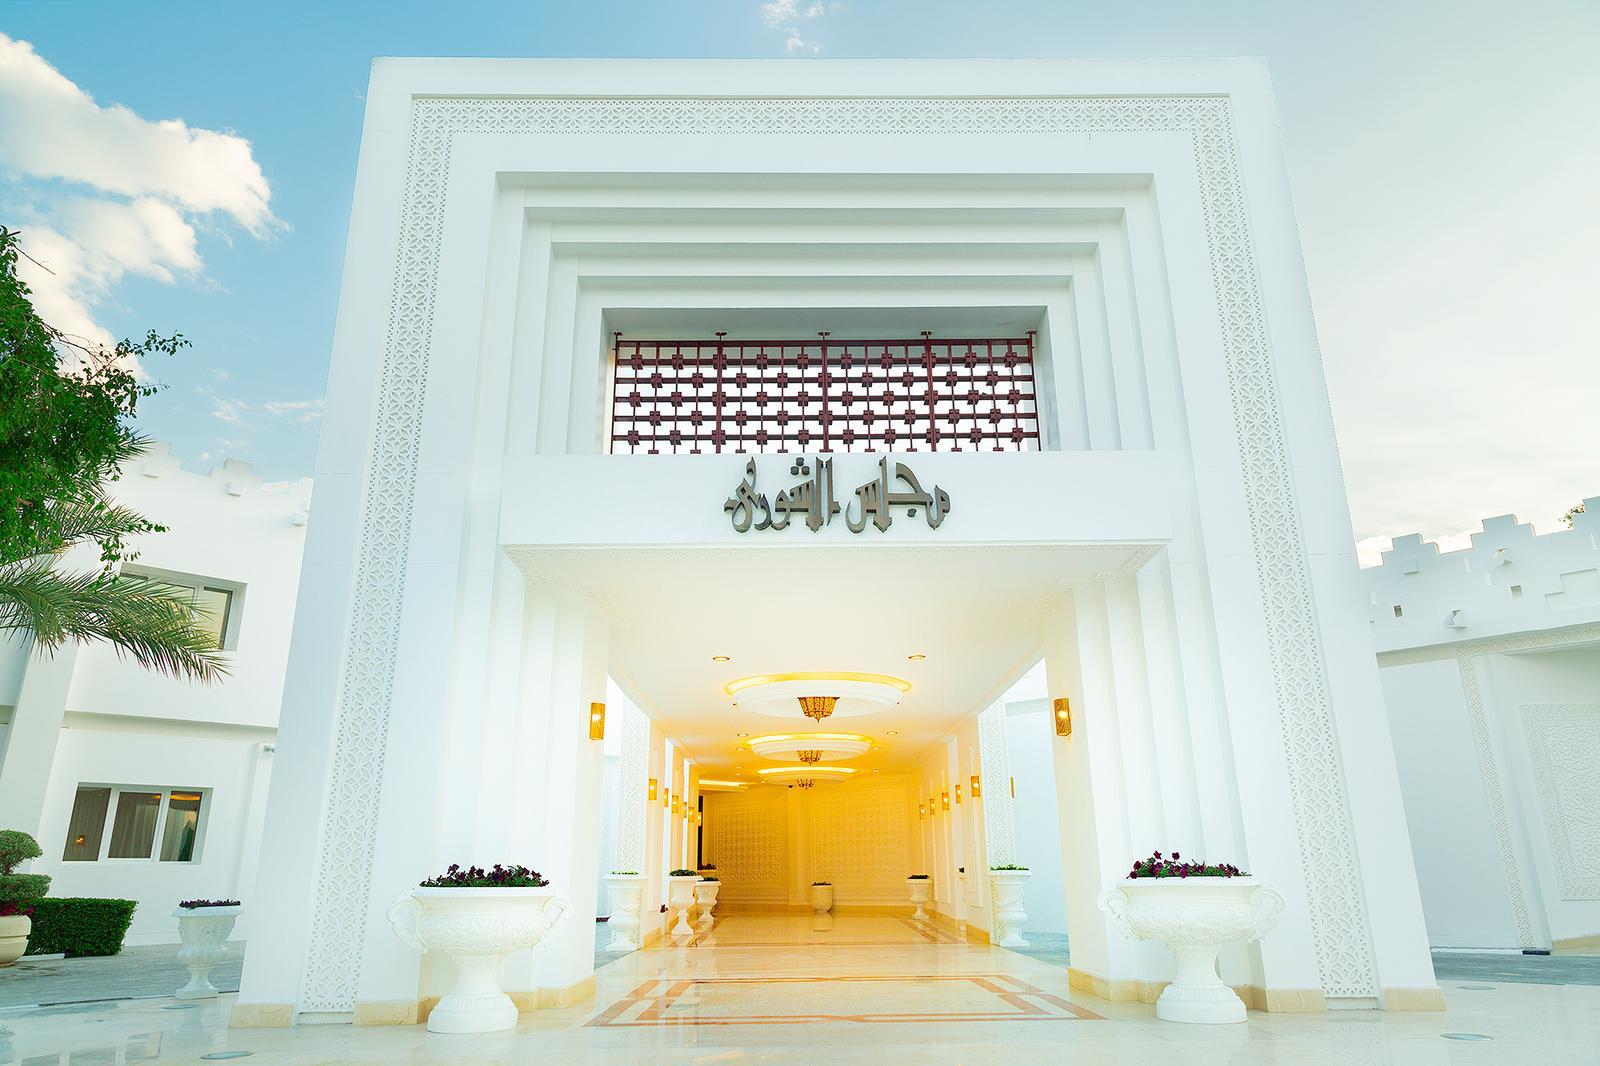 The Shura Council - The White Palace, Doha - Qatar